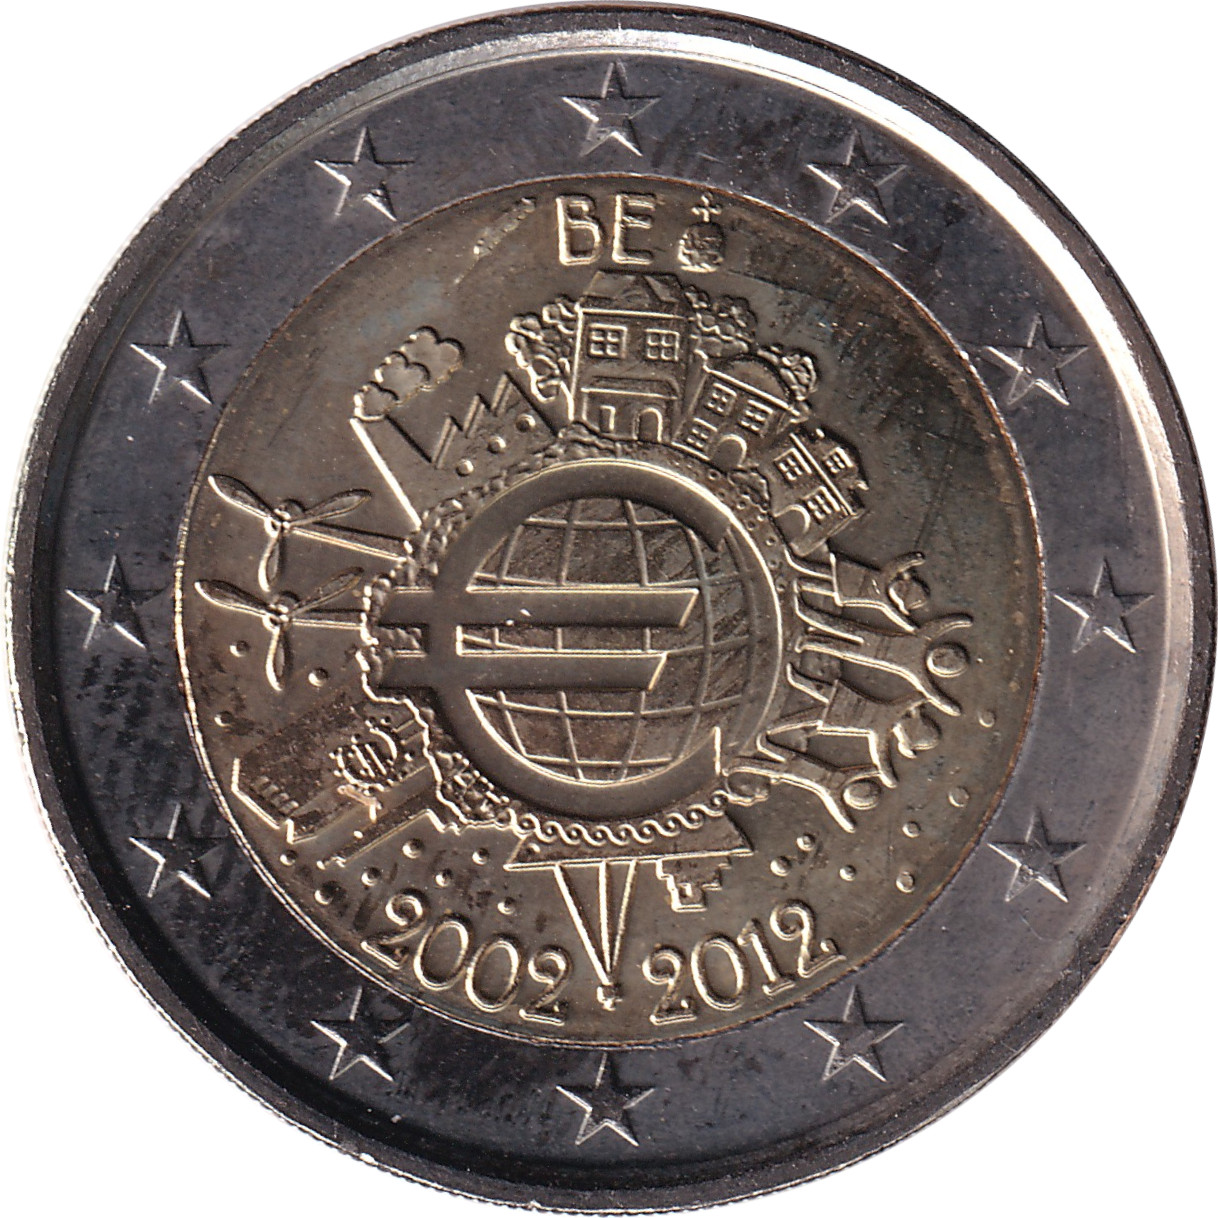 2 euro - Mise en circulation de l'Euro - Belgique